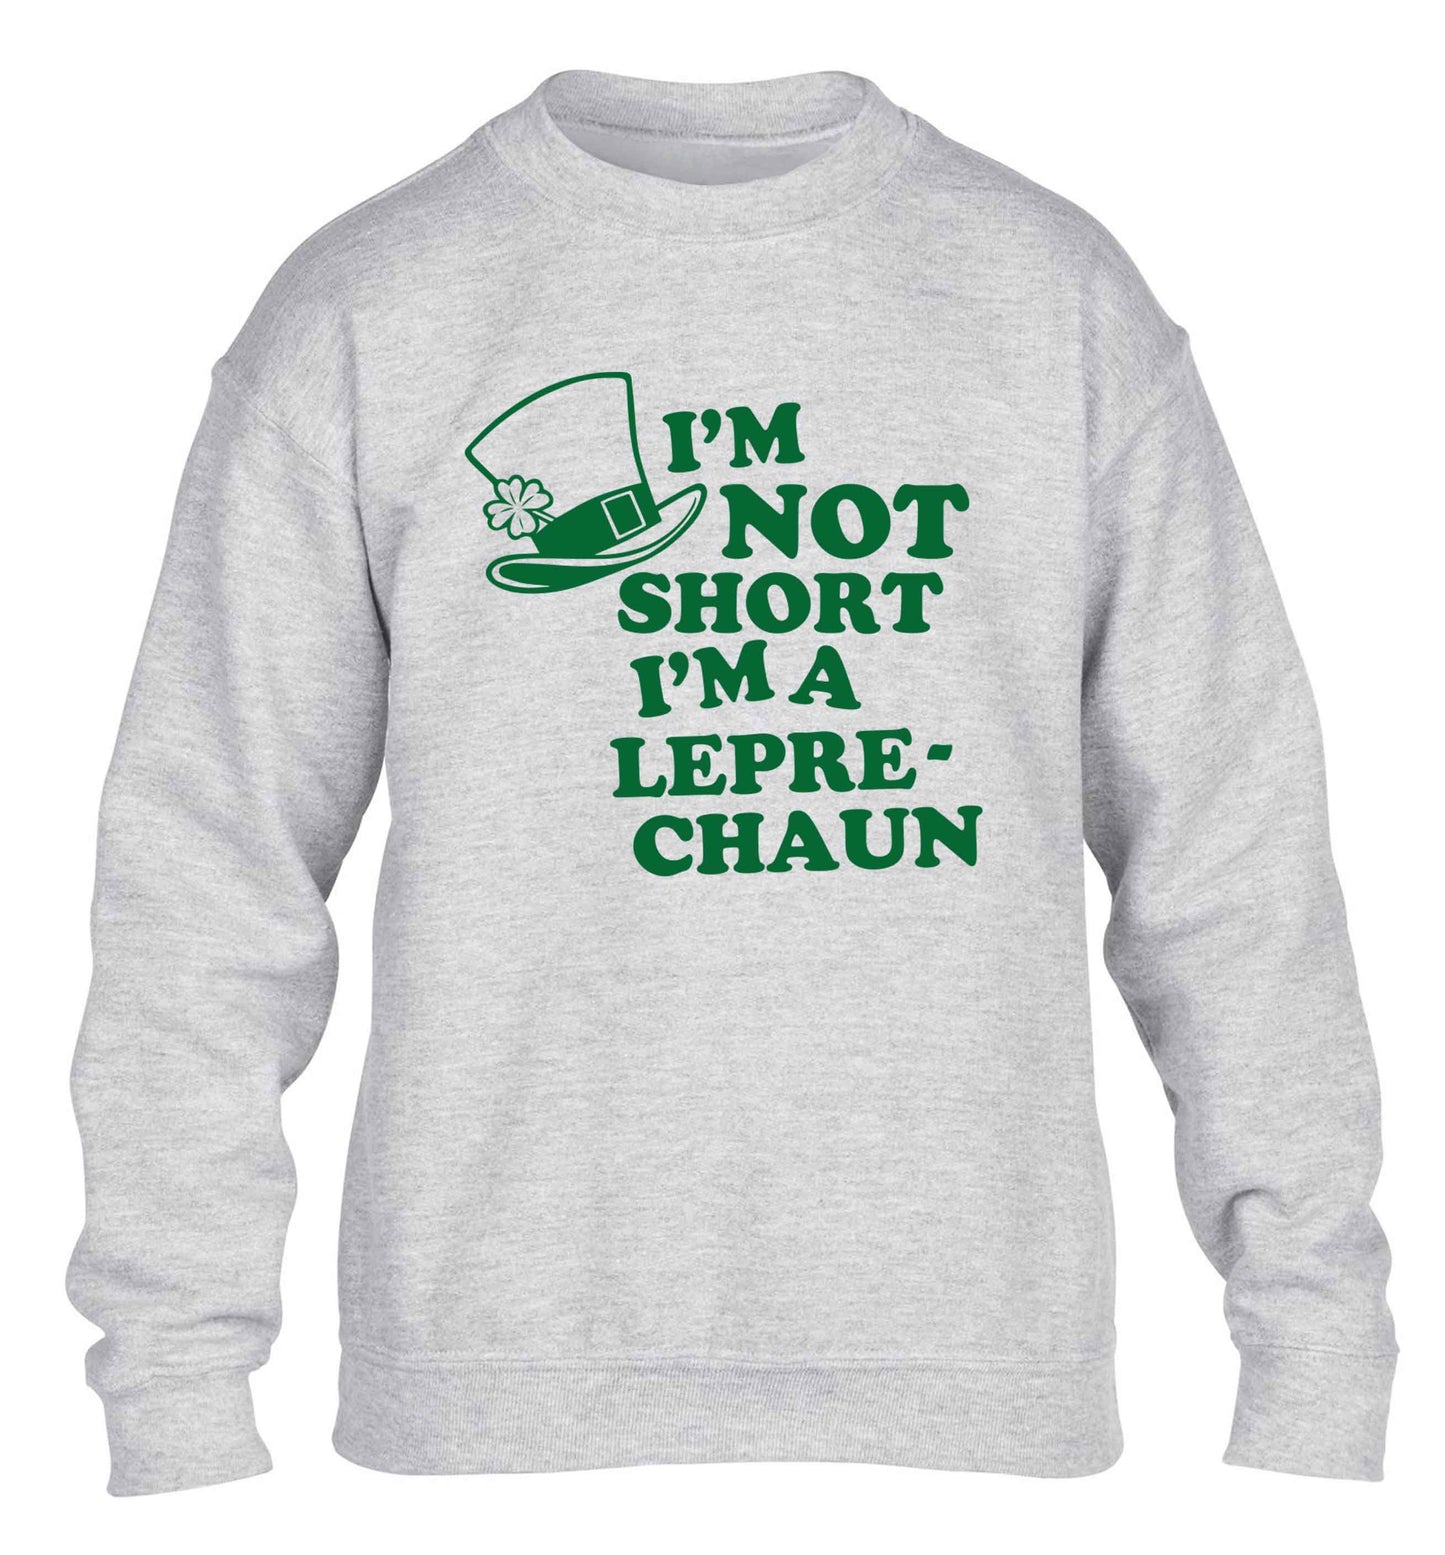 I'm not short I'm a leprechaun children's grey sweater 12-13 Years